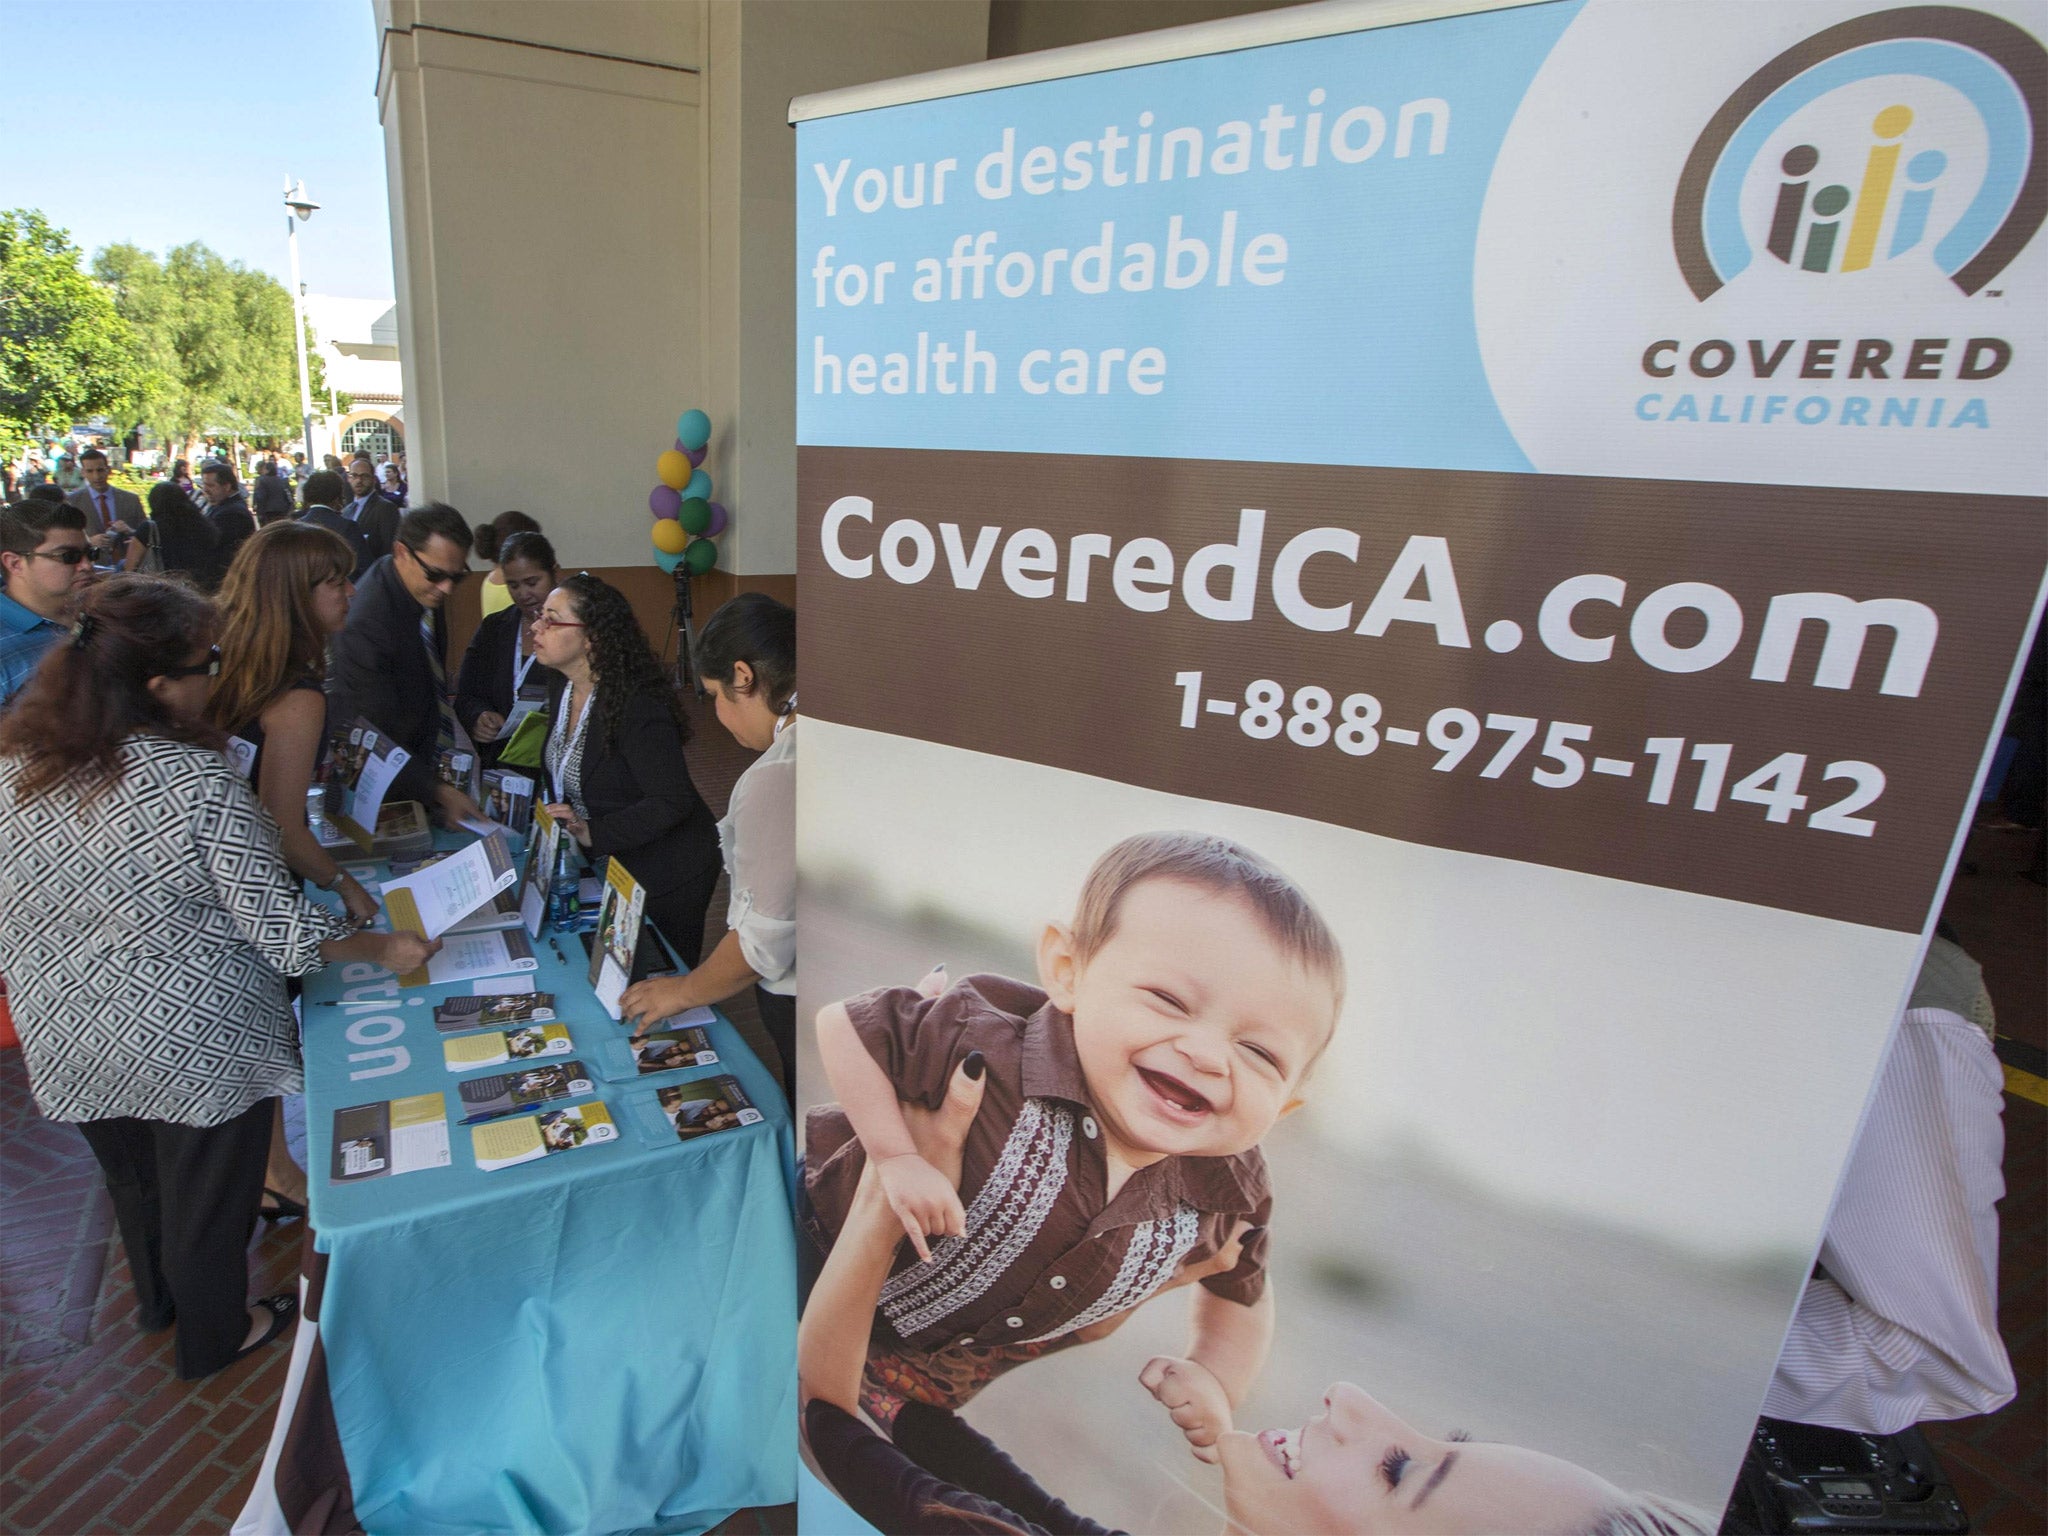 A health insurance event in LA proved popular